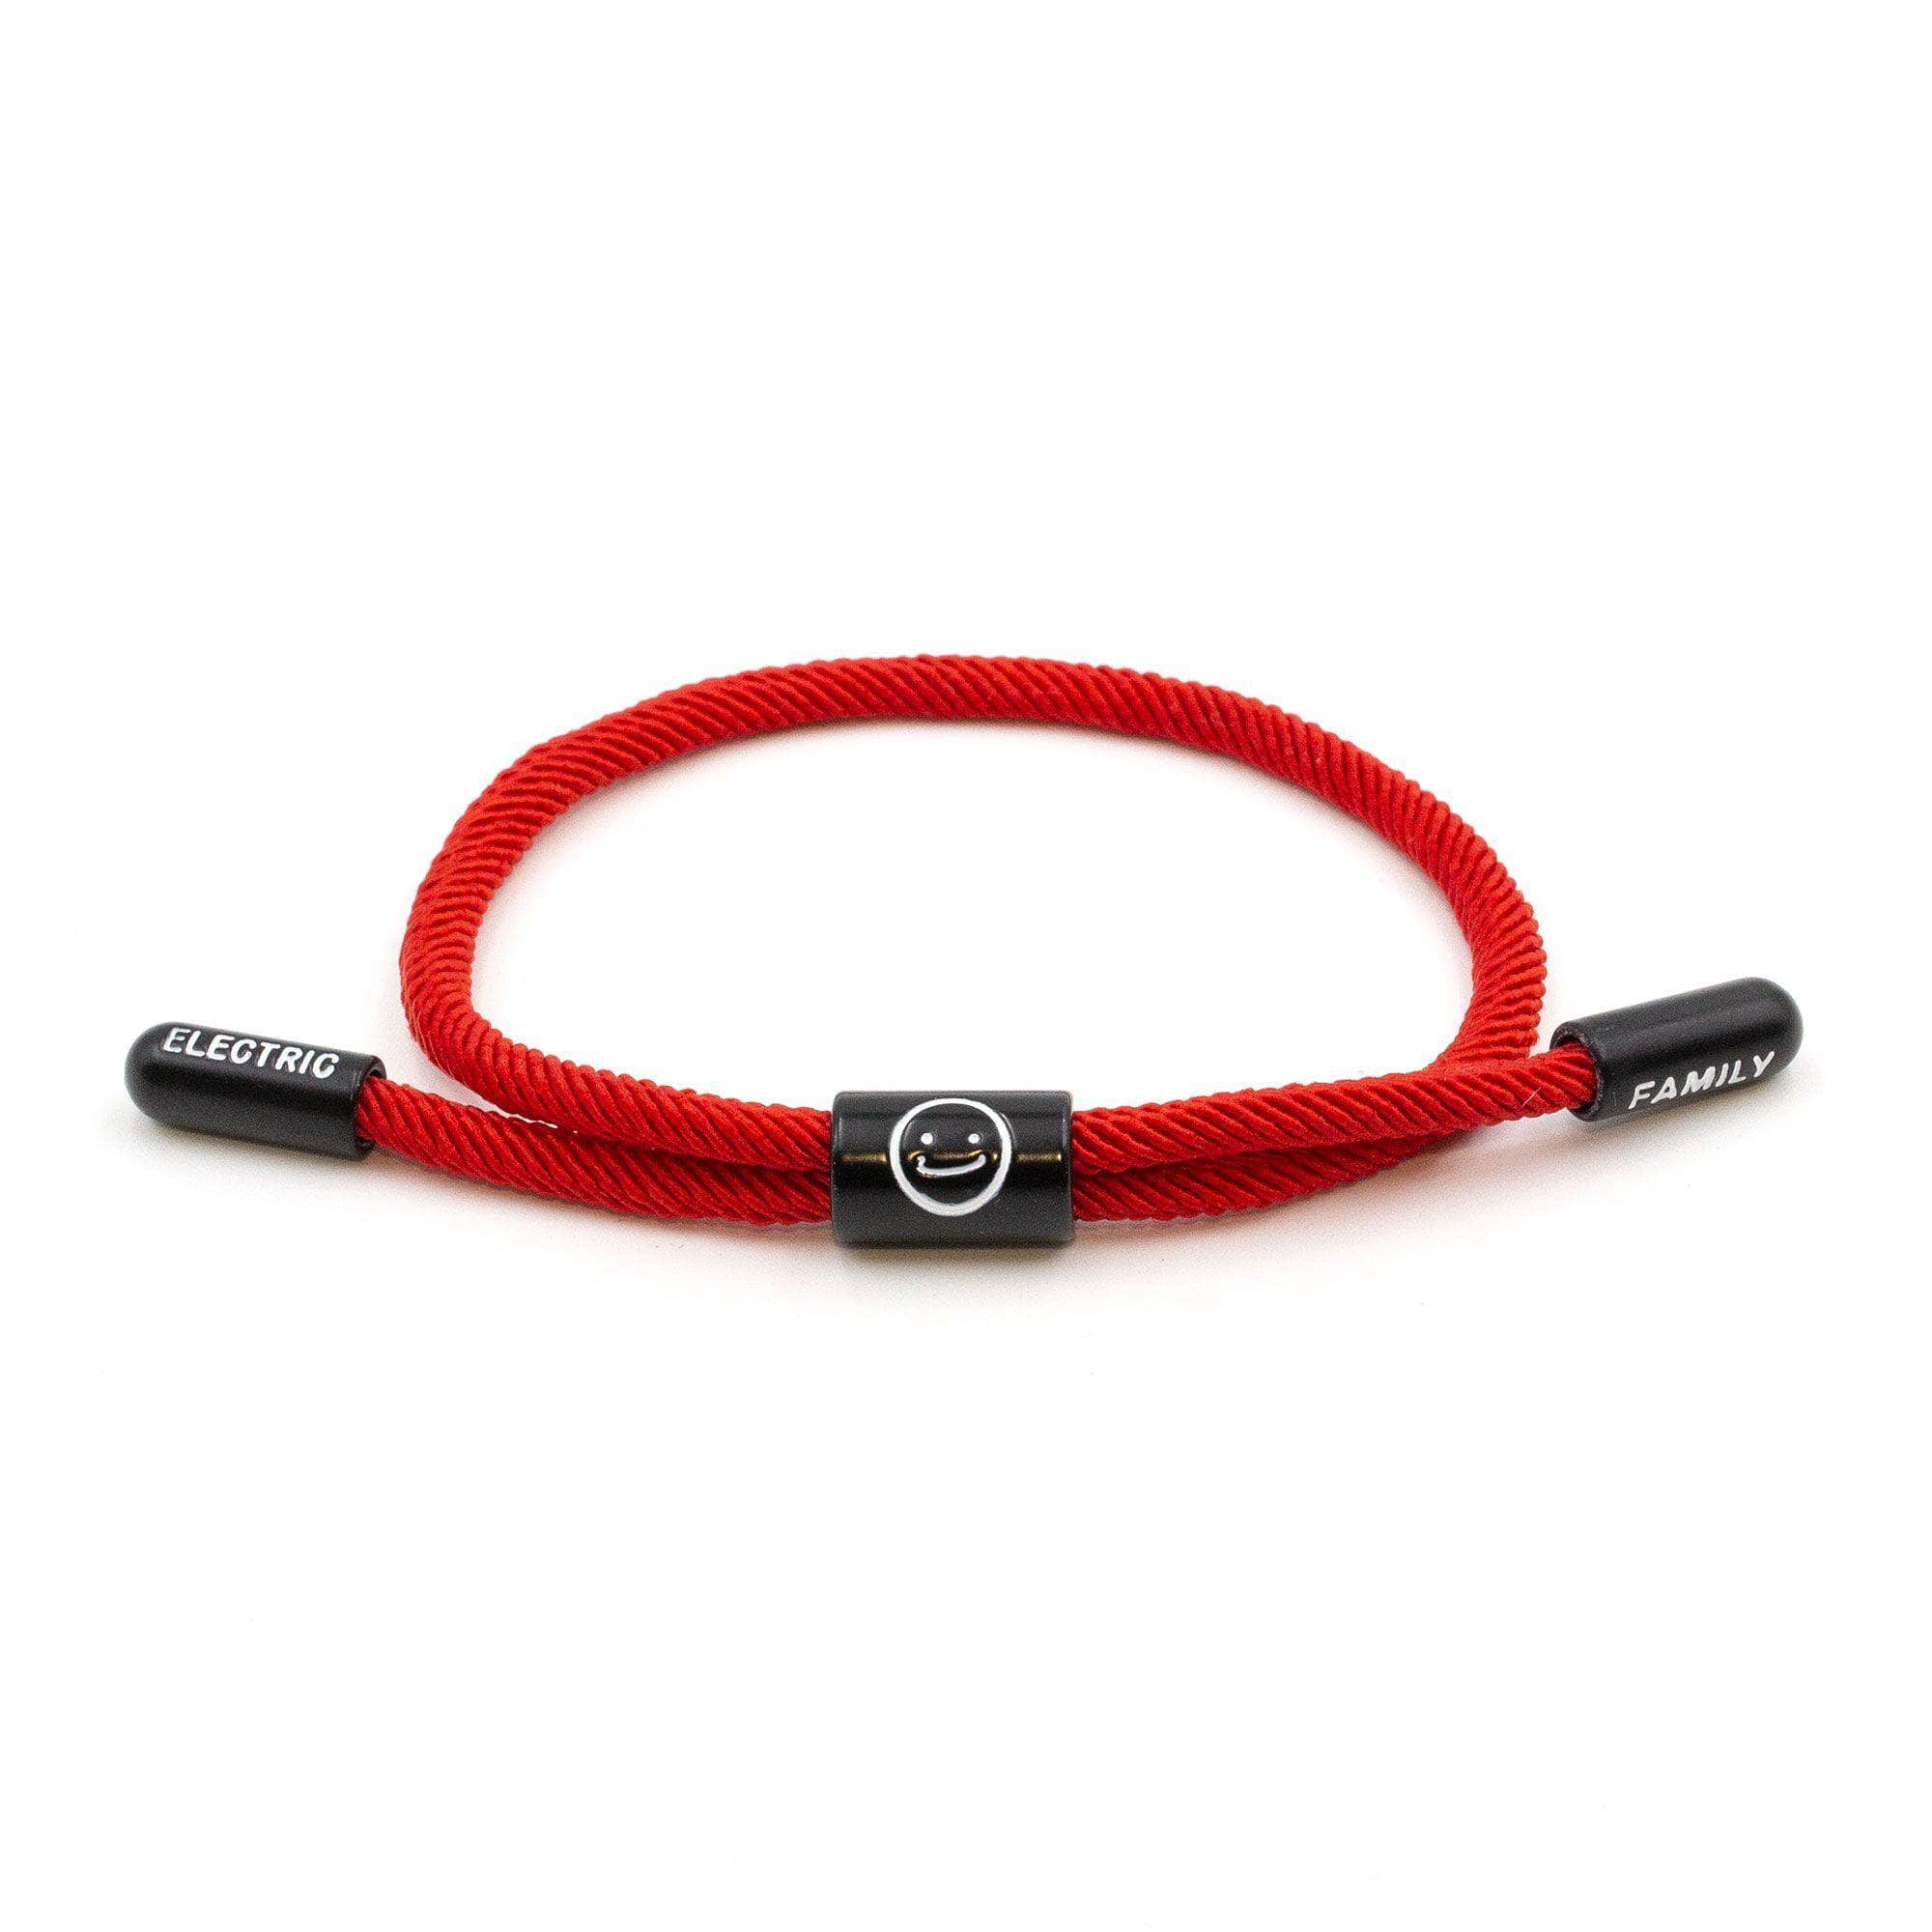 Good Times New School Bracelet (Red/Black) - New School Bracelet -  Electric Family-  Electric Family Official Artist Merchandise